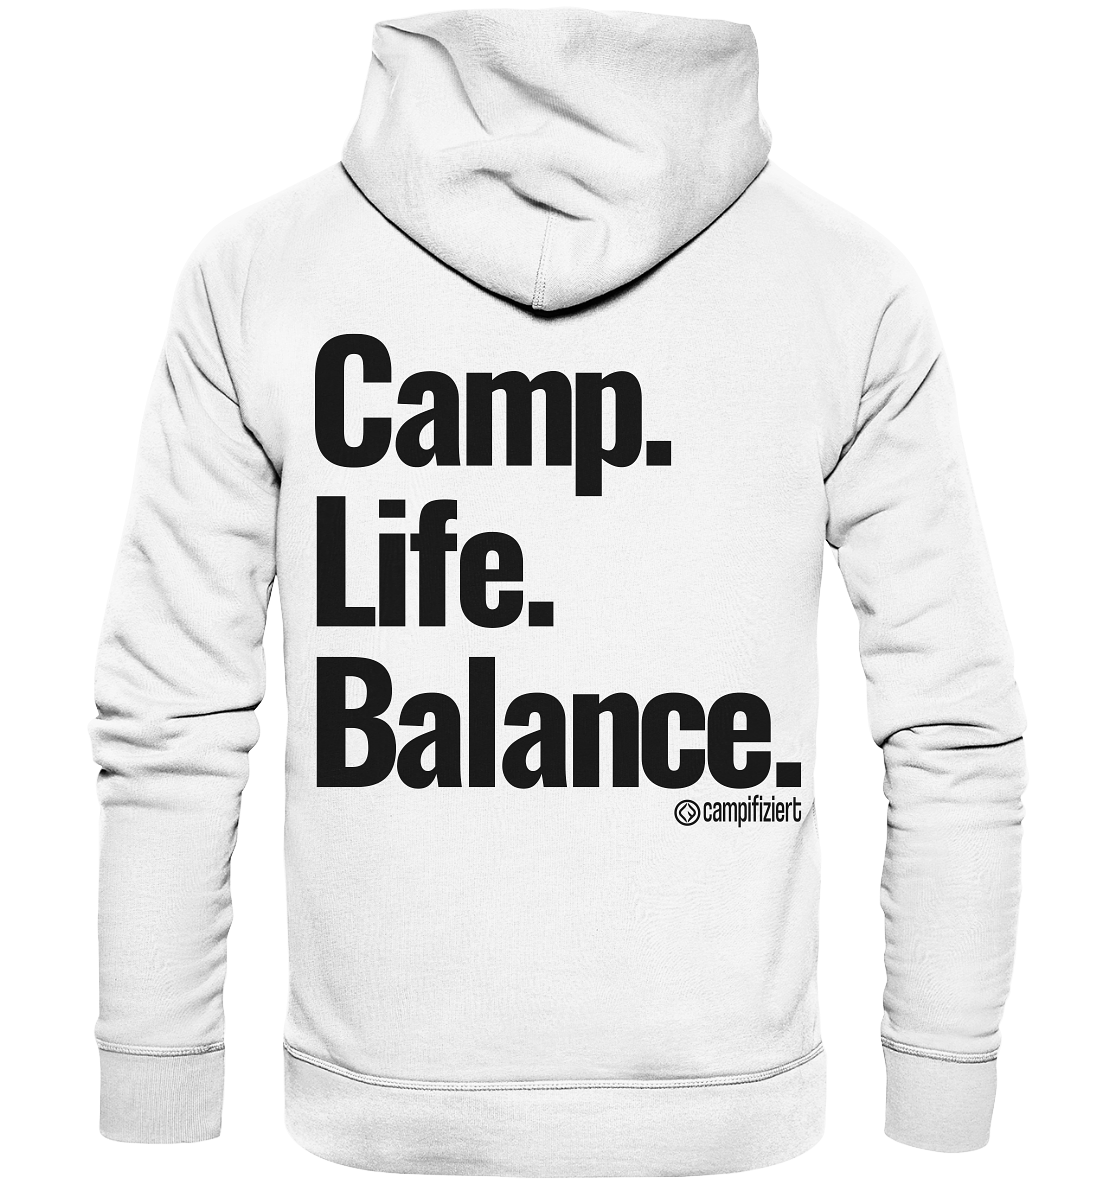 Camp.Life.Balance Backprint - Organic Hoodie